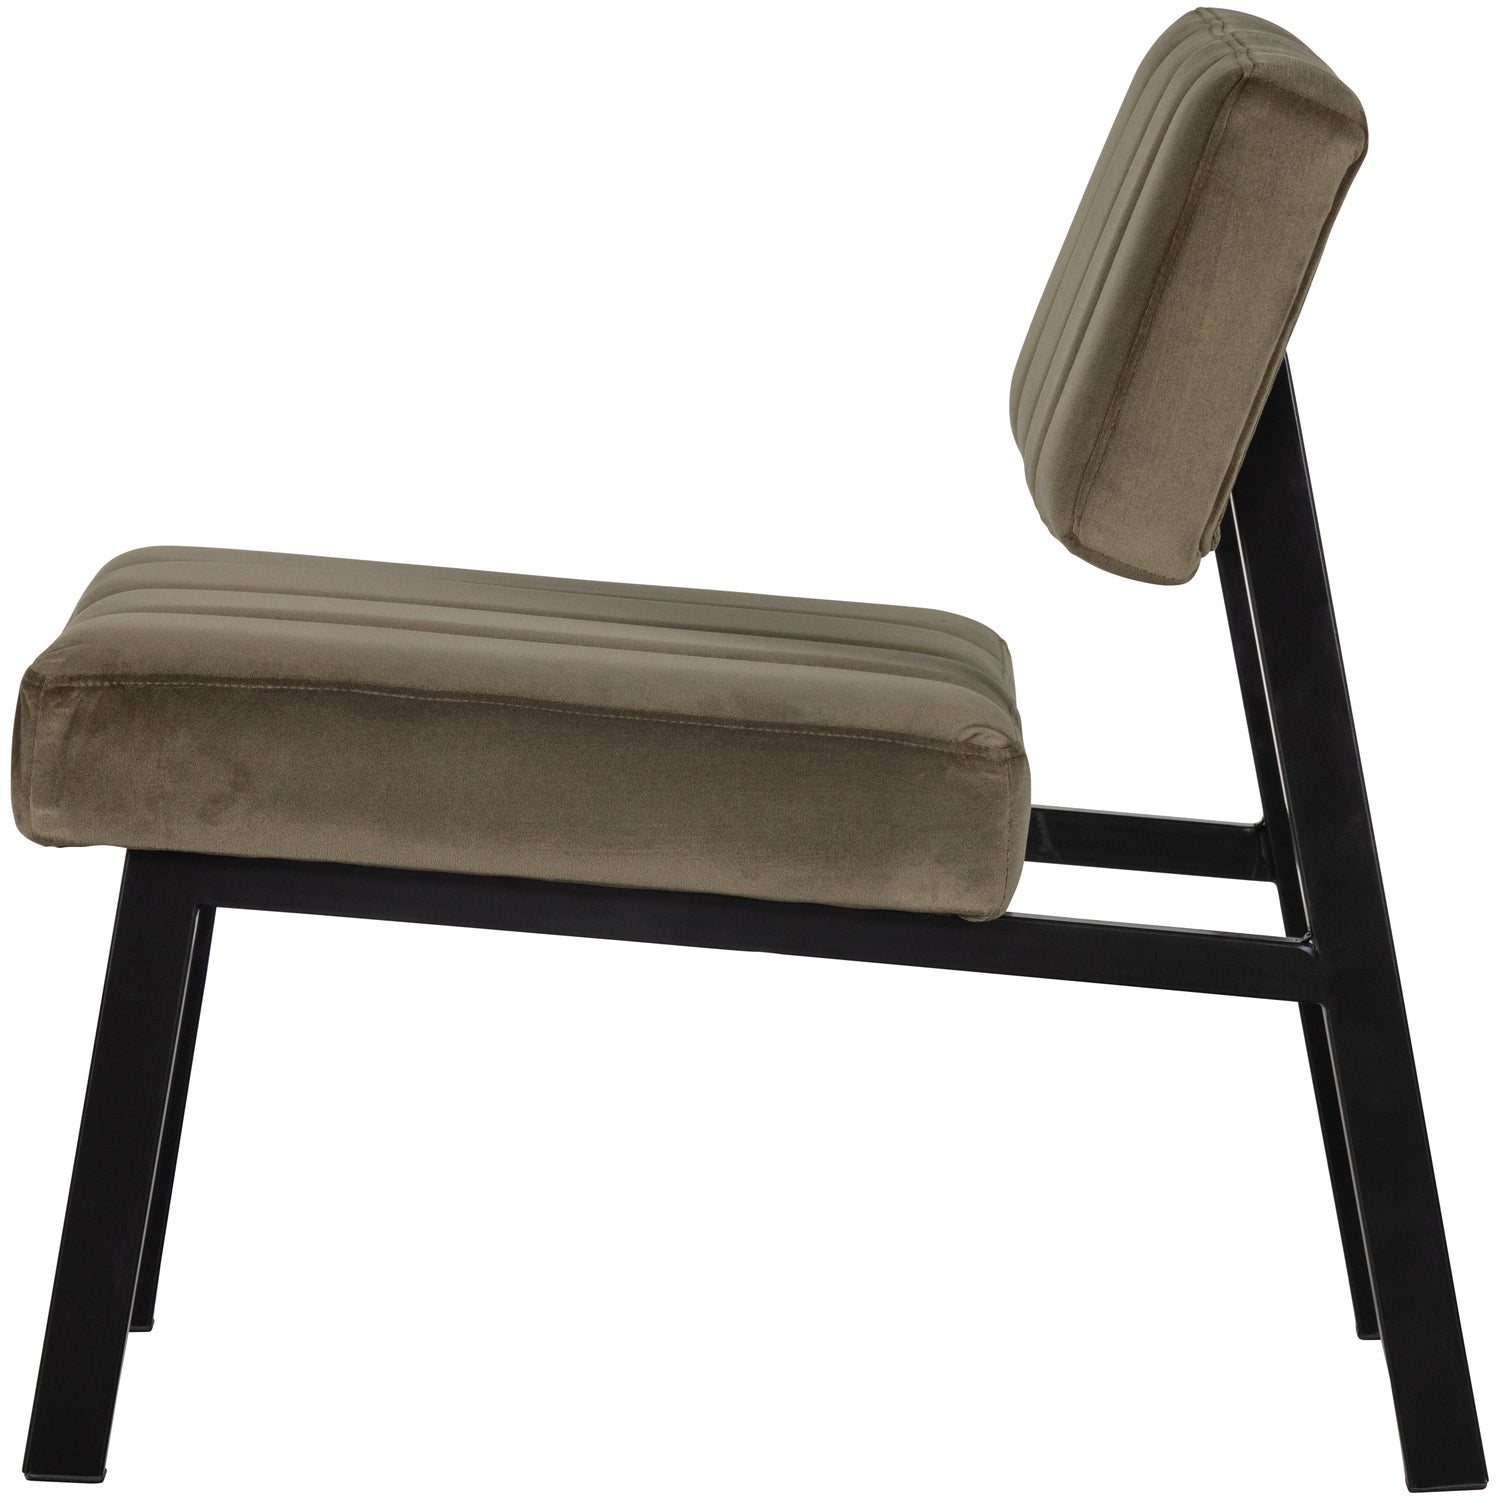 377205-A-03_VS_WE_Kaja_fauteuil_velvet_army.jpg?auto=webp&format=png&width=1500&height=1500